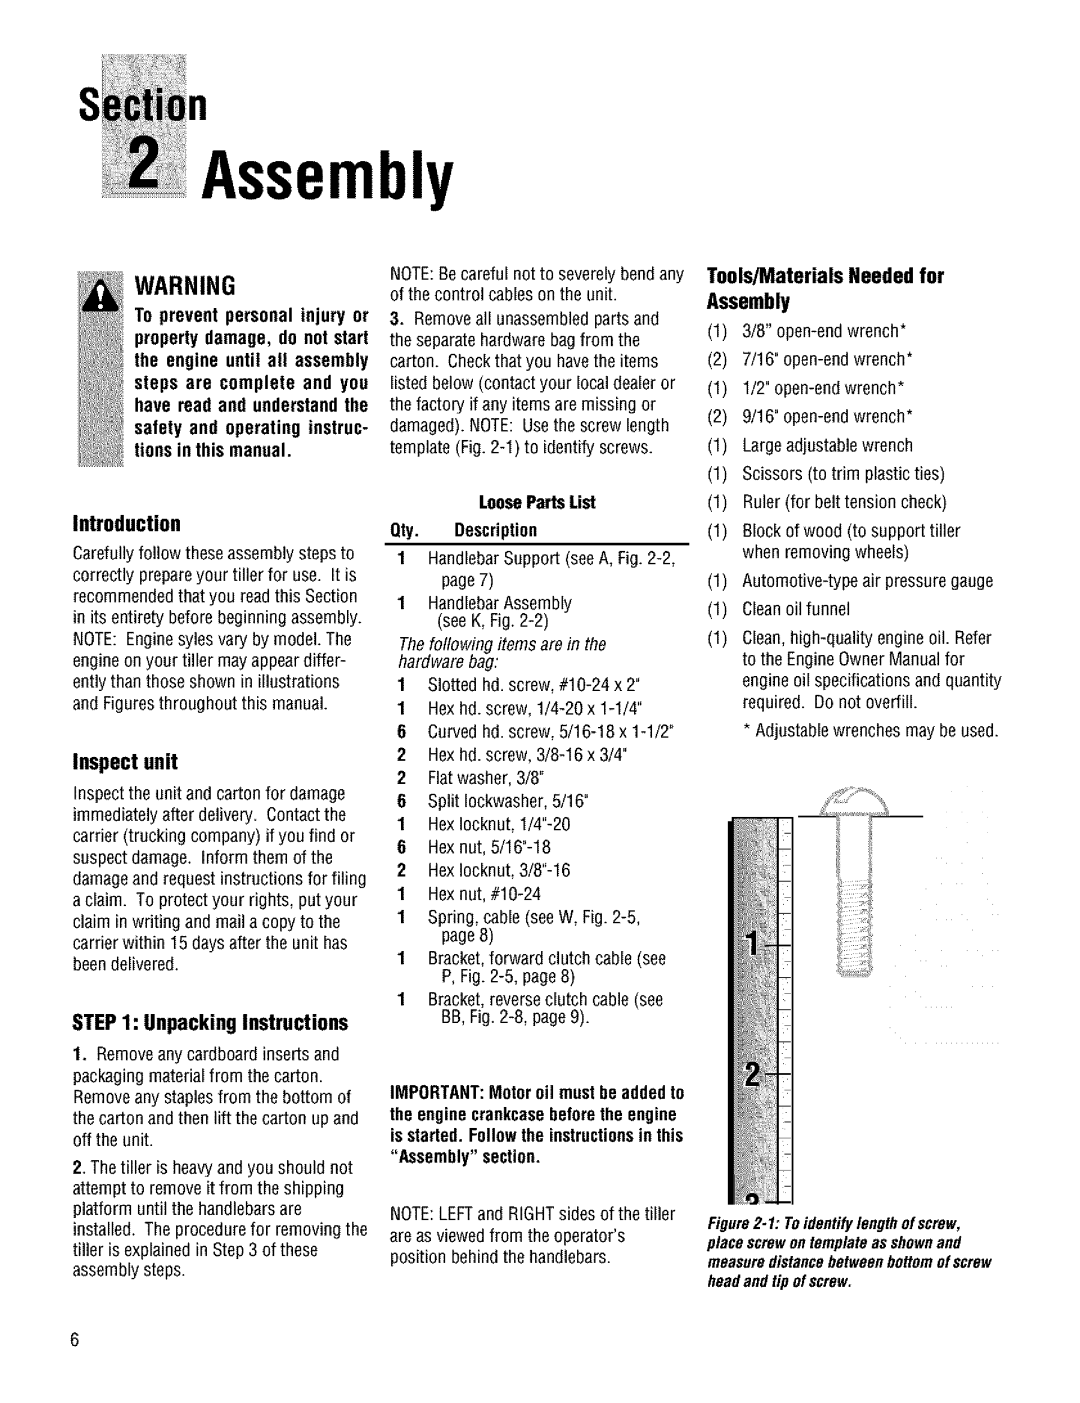 Troy-Bilt 644H UnpackingInstructions, ToolsMaterialsNeededfor Assembly, Introduction, Inspect unit, headandtip ofscrew 